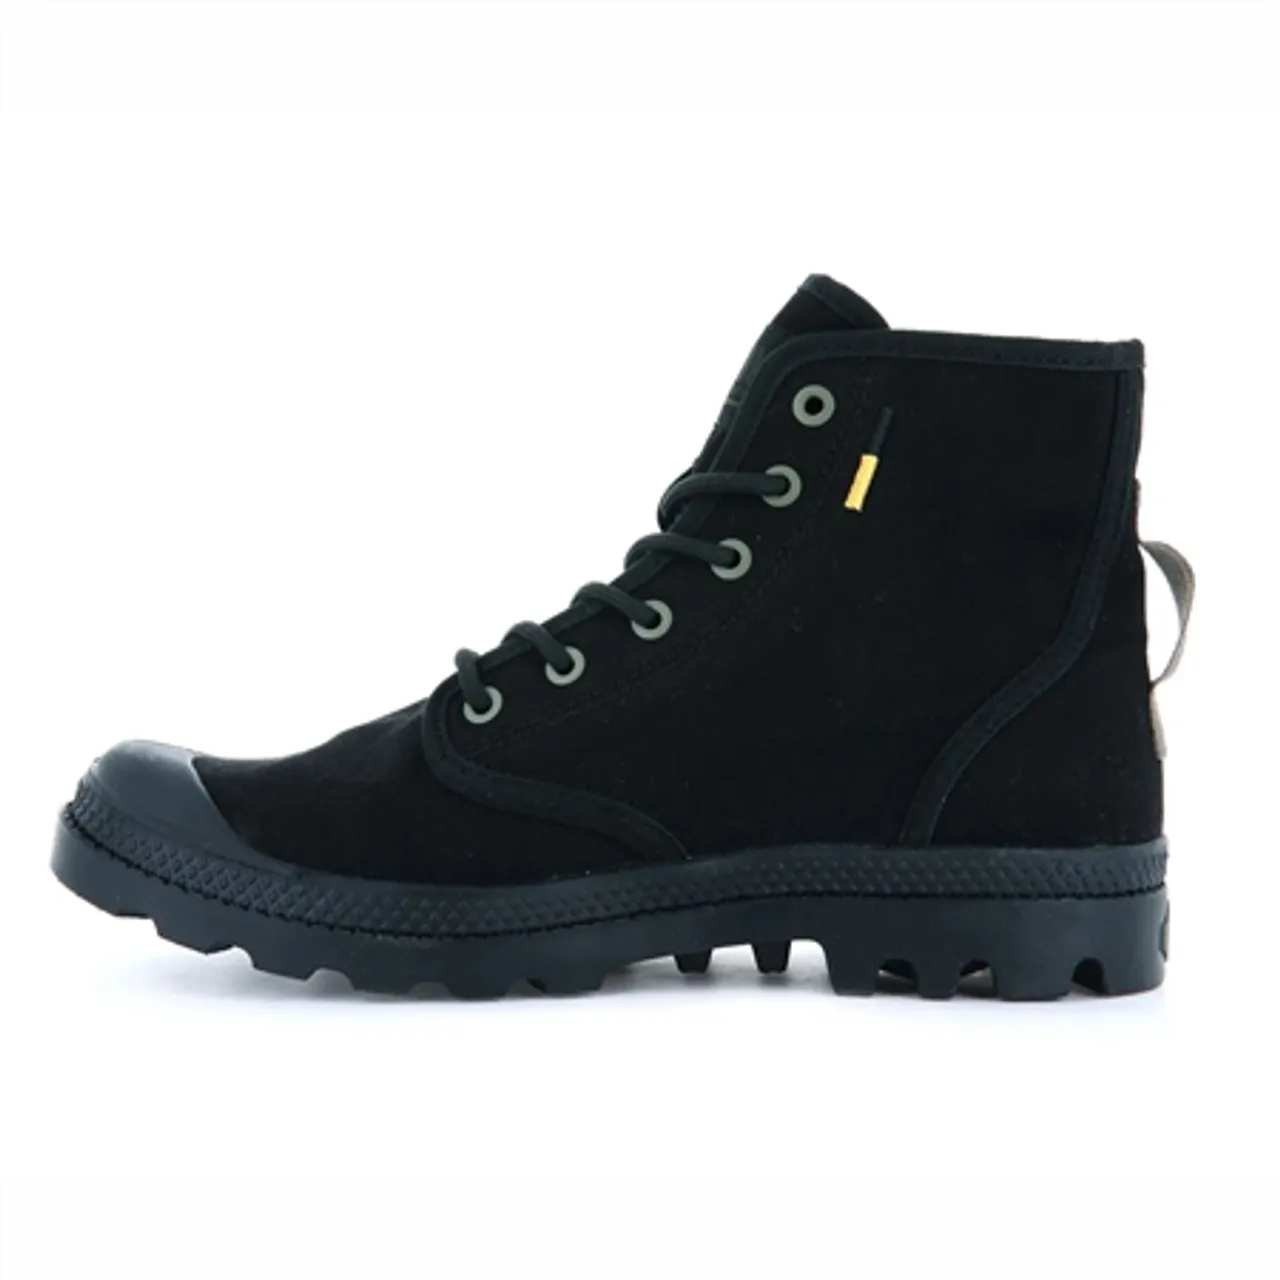 Palladium Pampa Hi HTG Supply Boots - Black - UK 8 (EU 42)